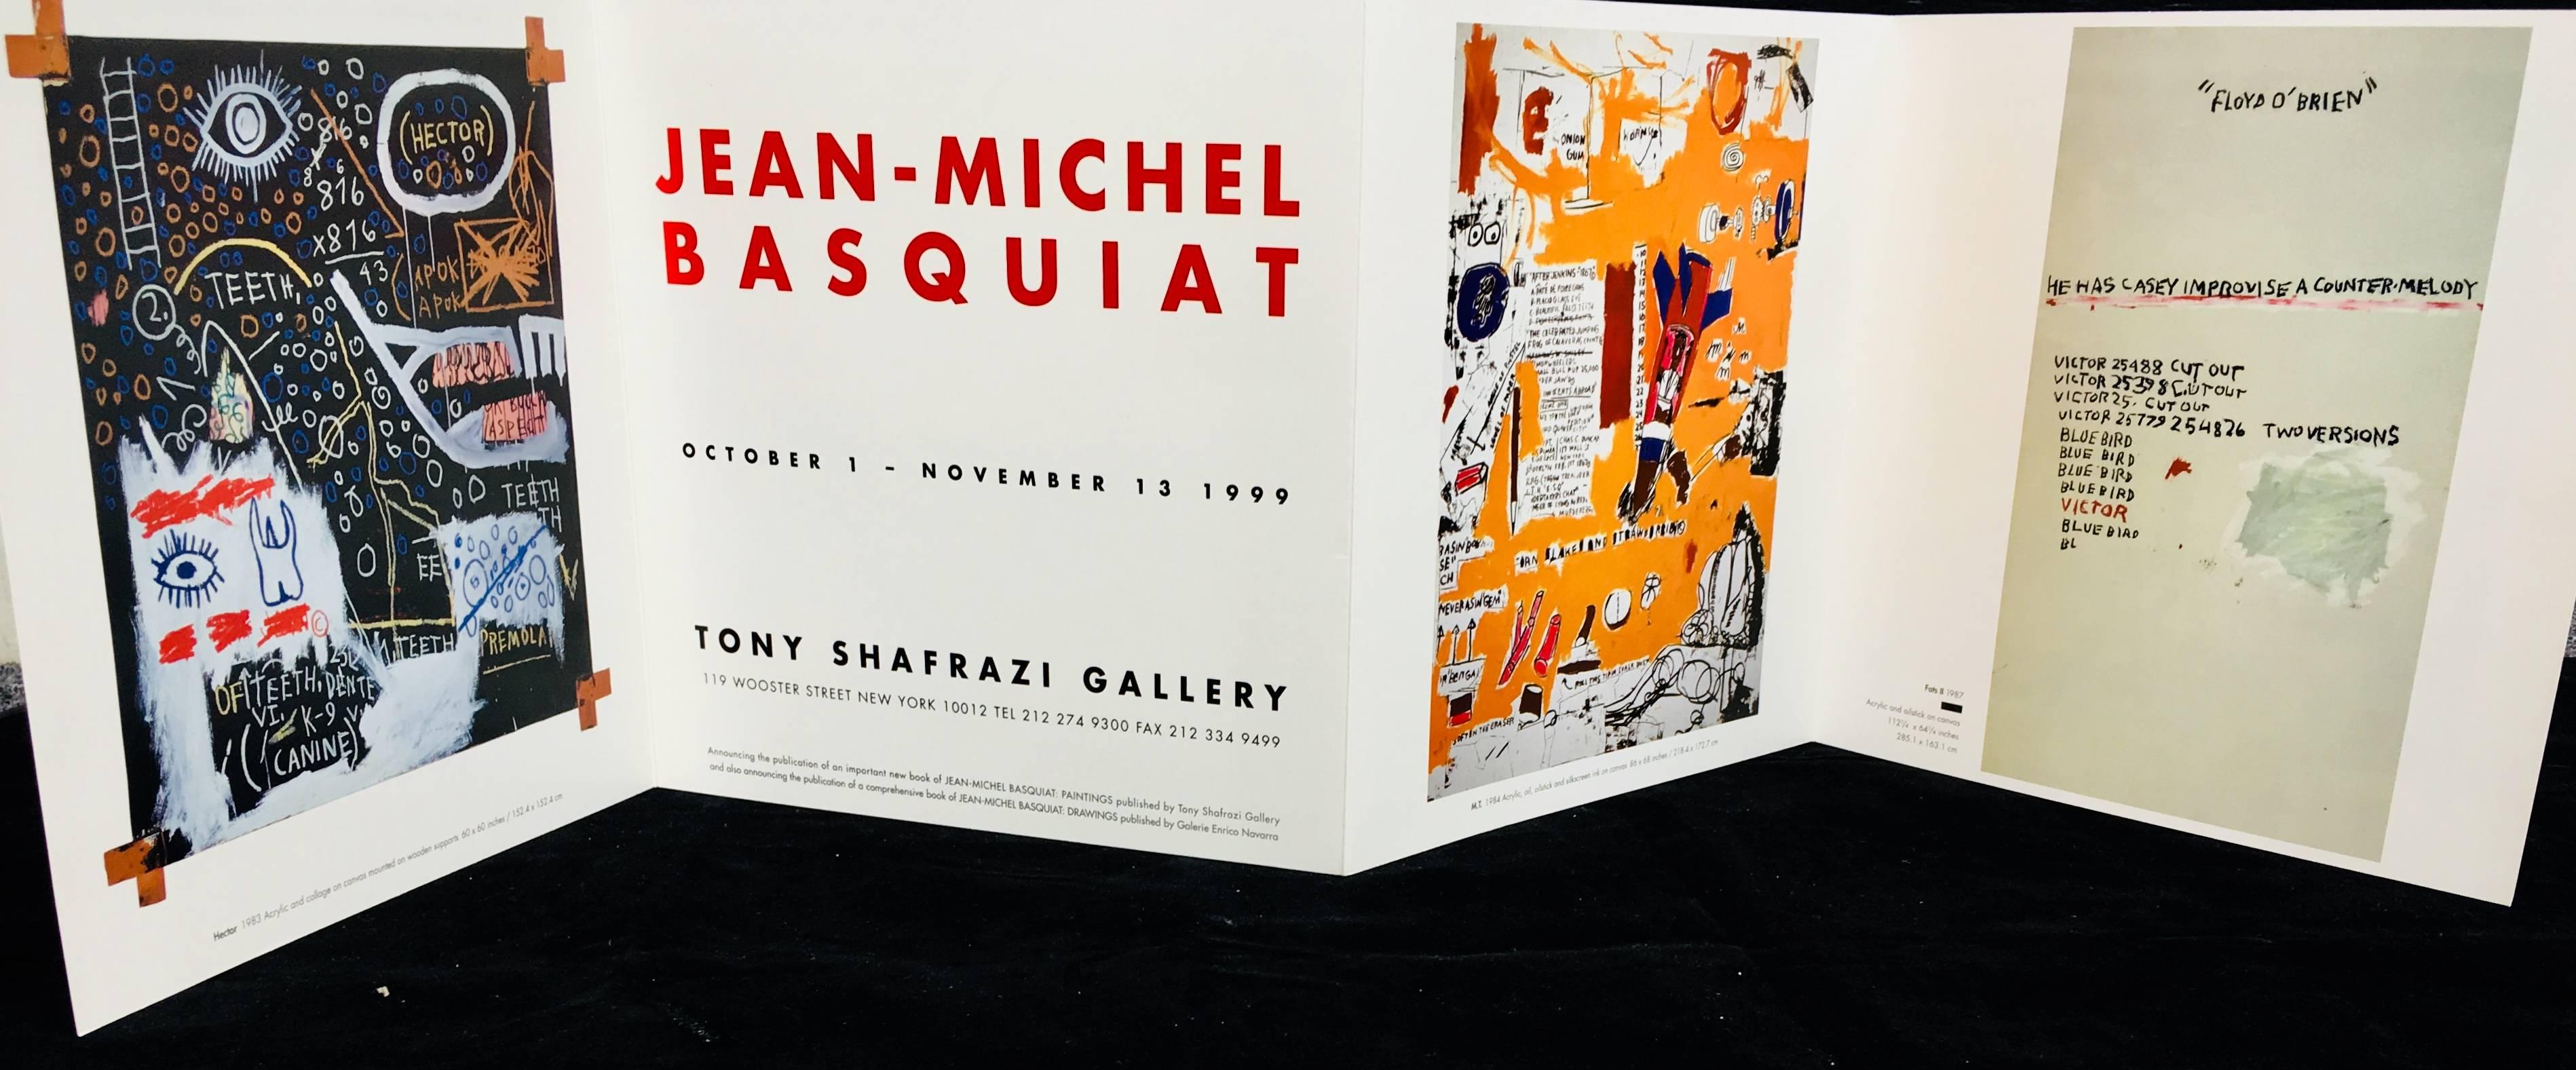 Basquiat announcement card/poster (Tony Shafrazi Gallery) - Pop Art Art by after Jean-Michel Basquiat